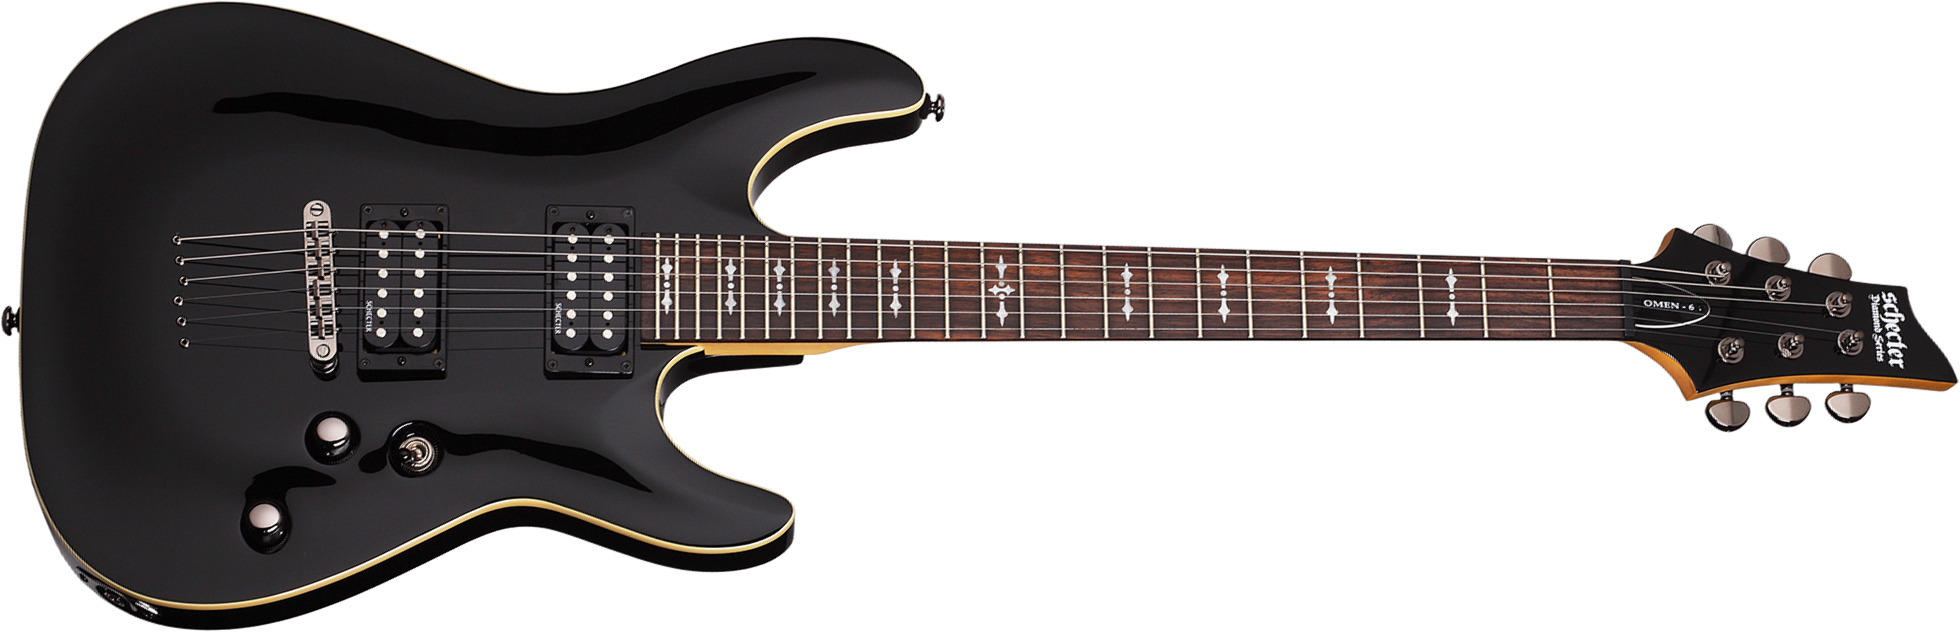 Schecter Omen-6 2h Ht Rw - Black - Guitarra eléctrica con forma de str. - Main picture